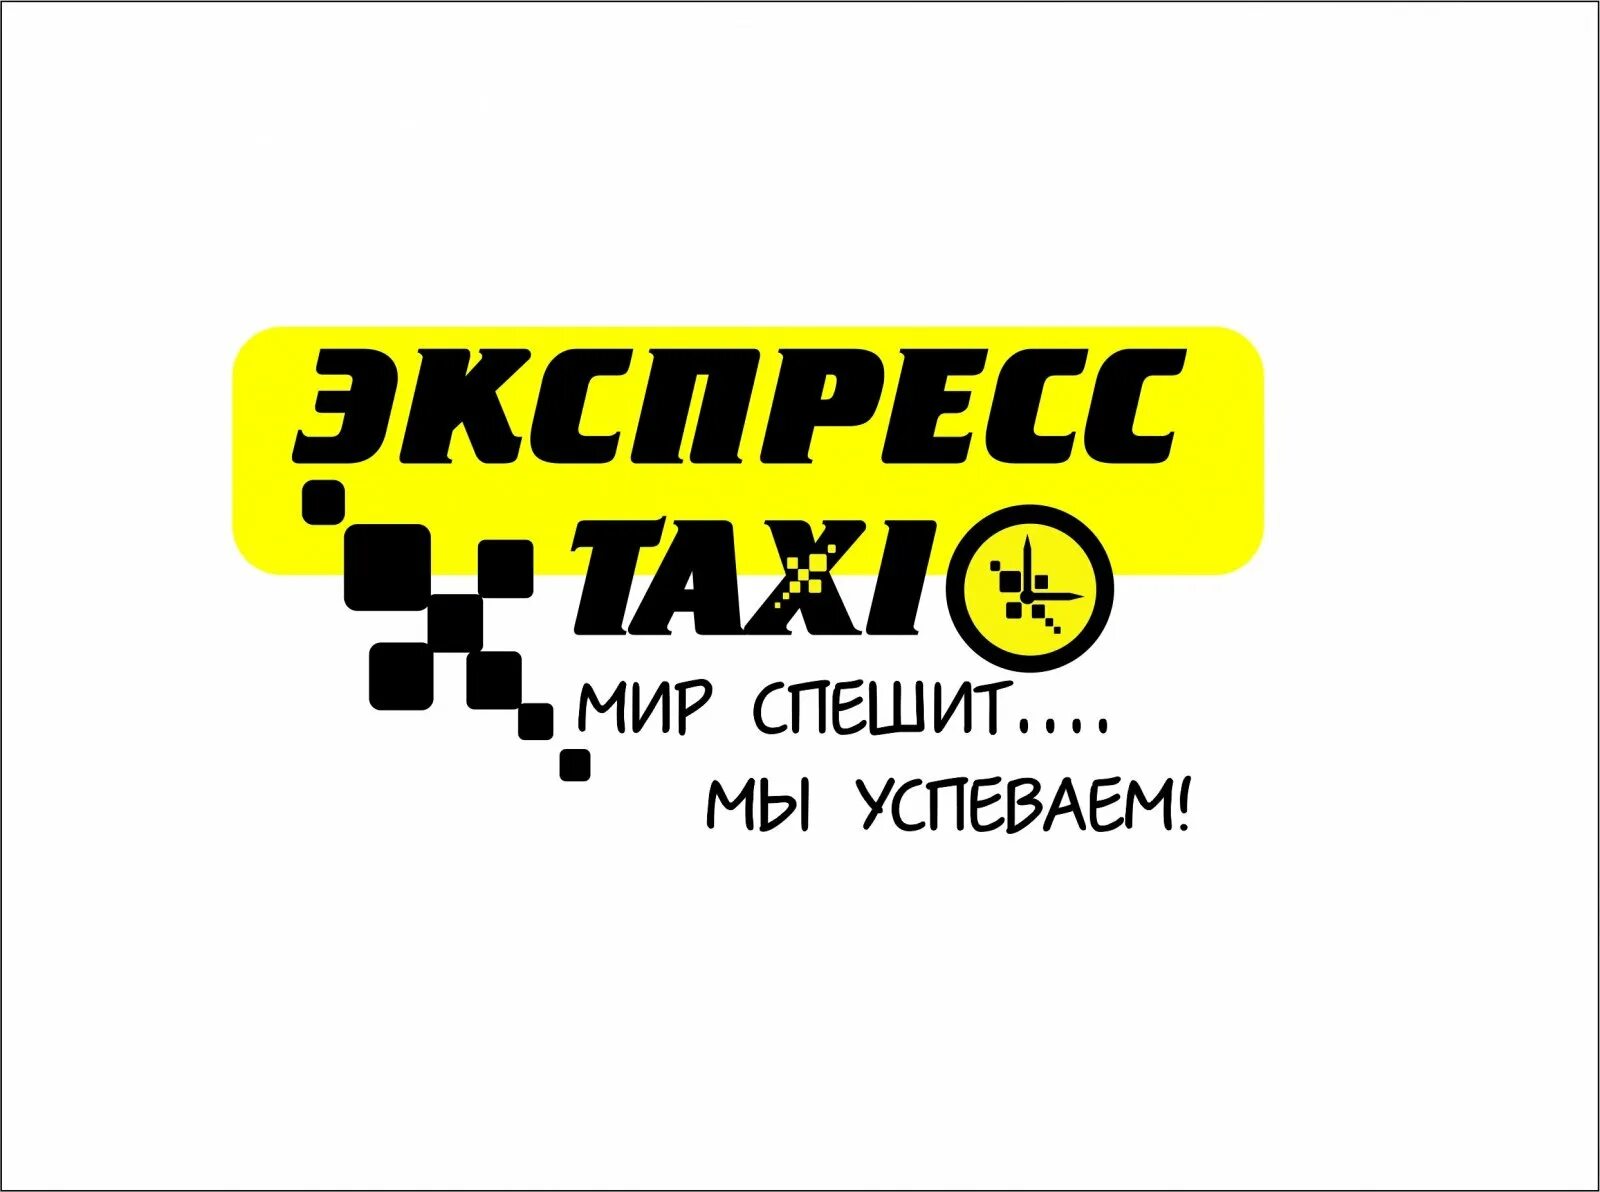 Такси саянск. Такси экспресс. Такси надпись. Логотип такси. Аватарка такси.